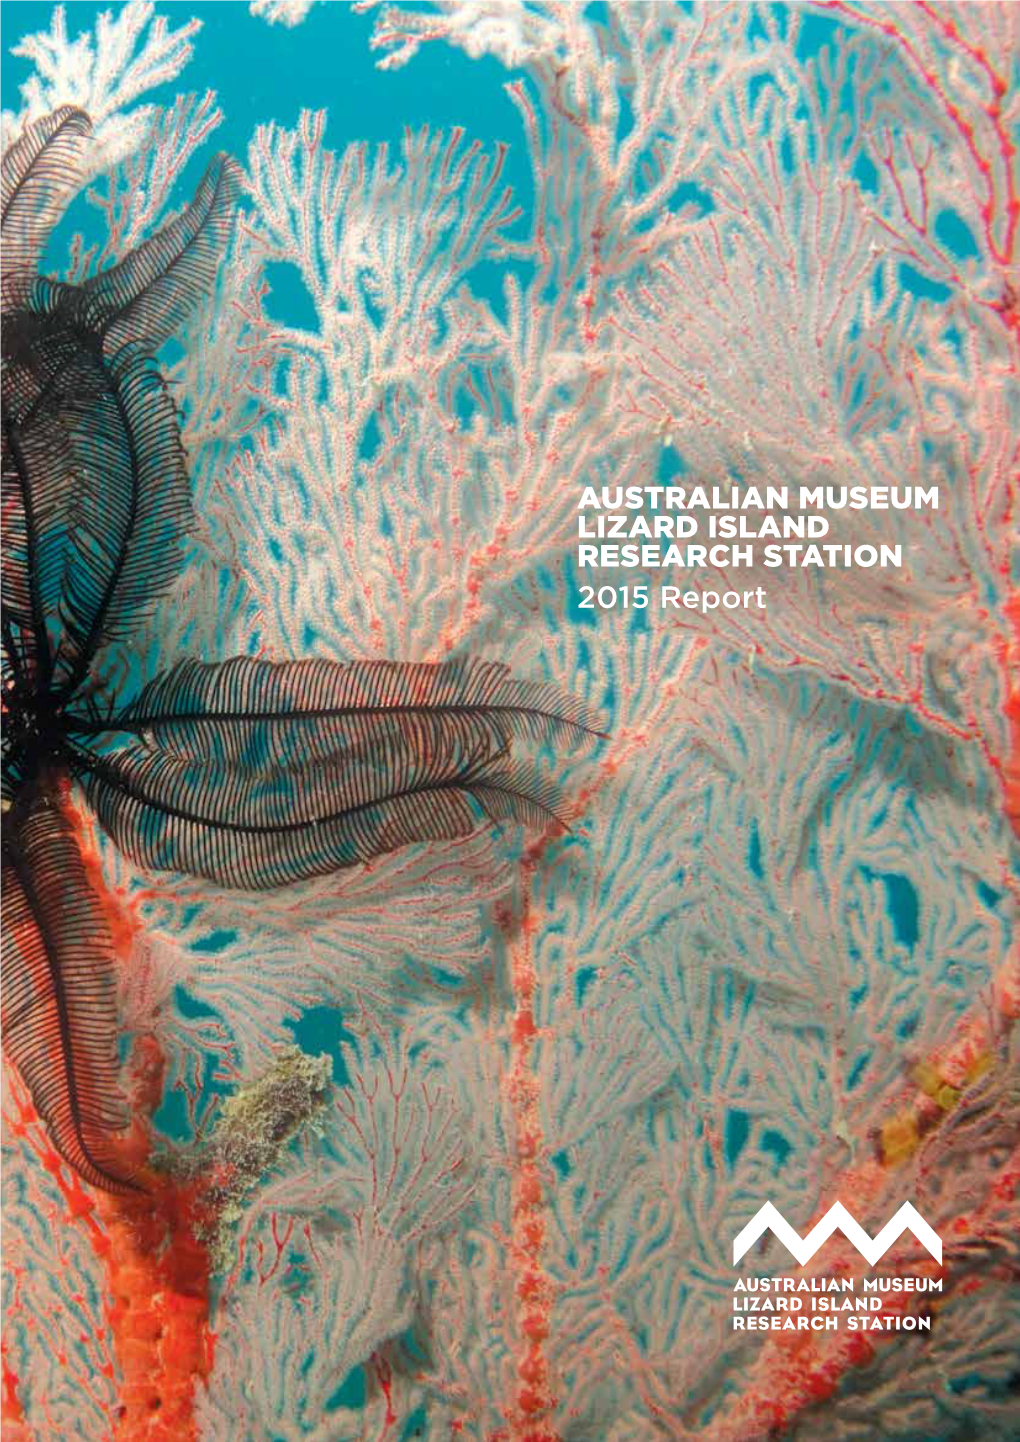 AUSTRALIAN MUSEUM LIZARD ISLAND RESEARCH STATION 2015 Report 2